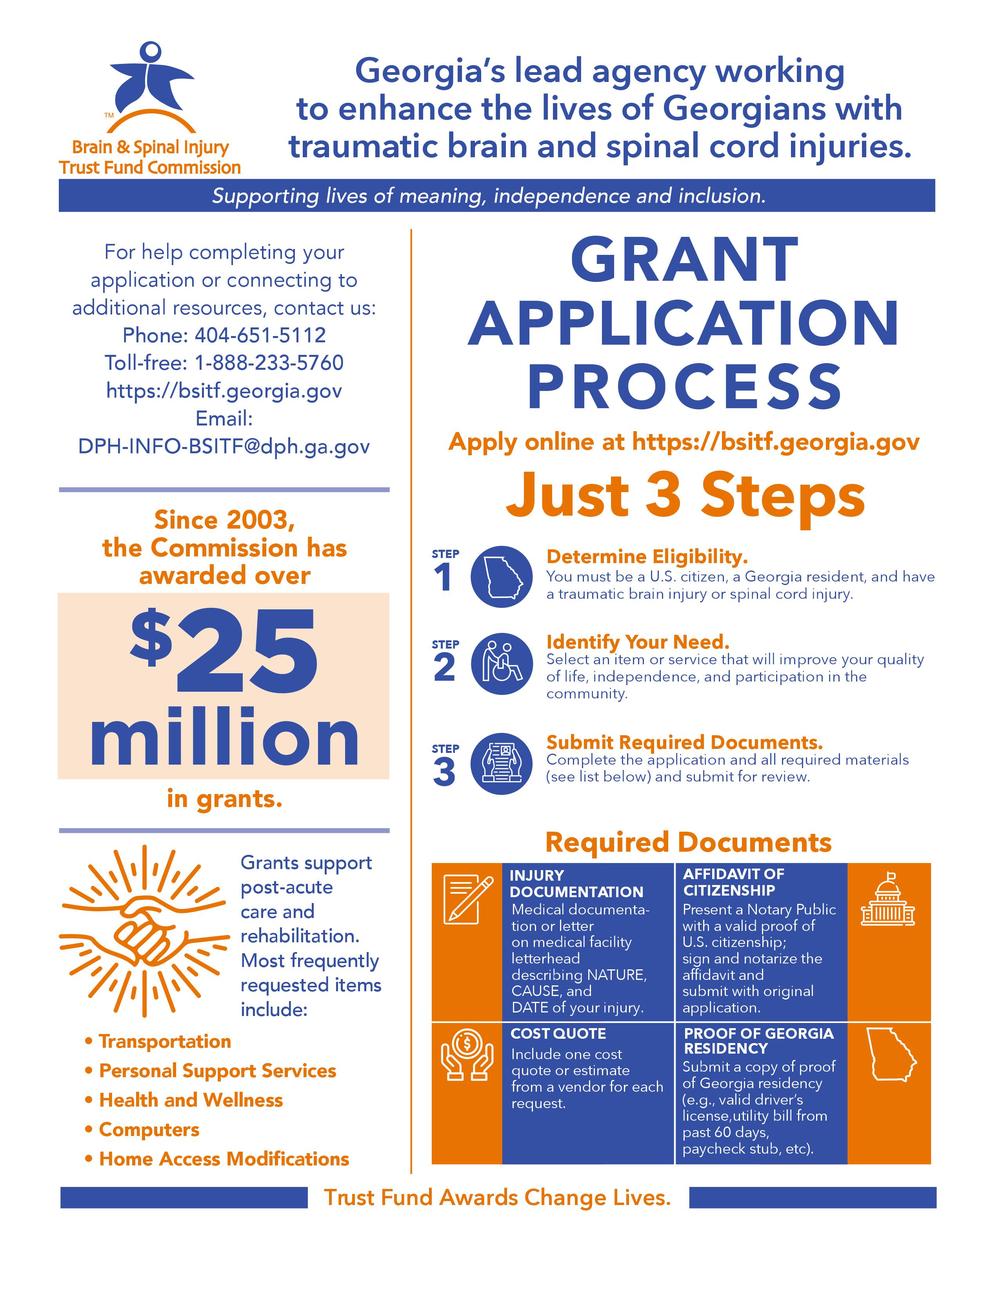 Grant Application Process - 1